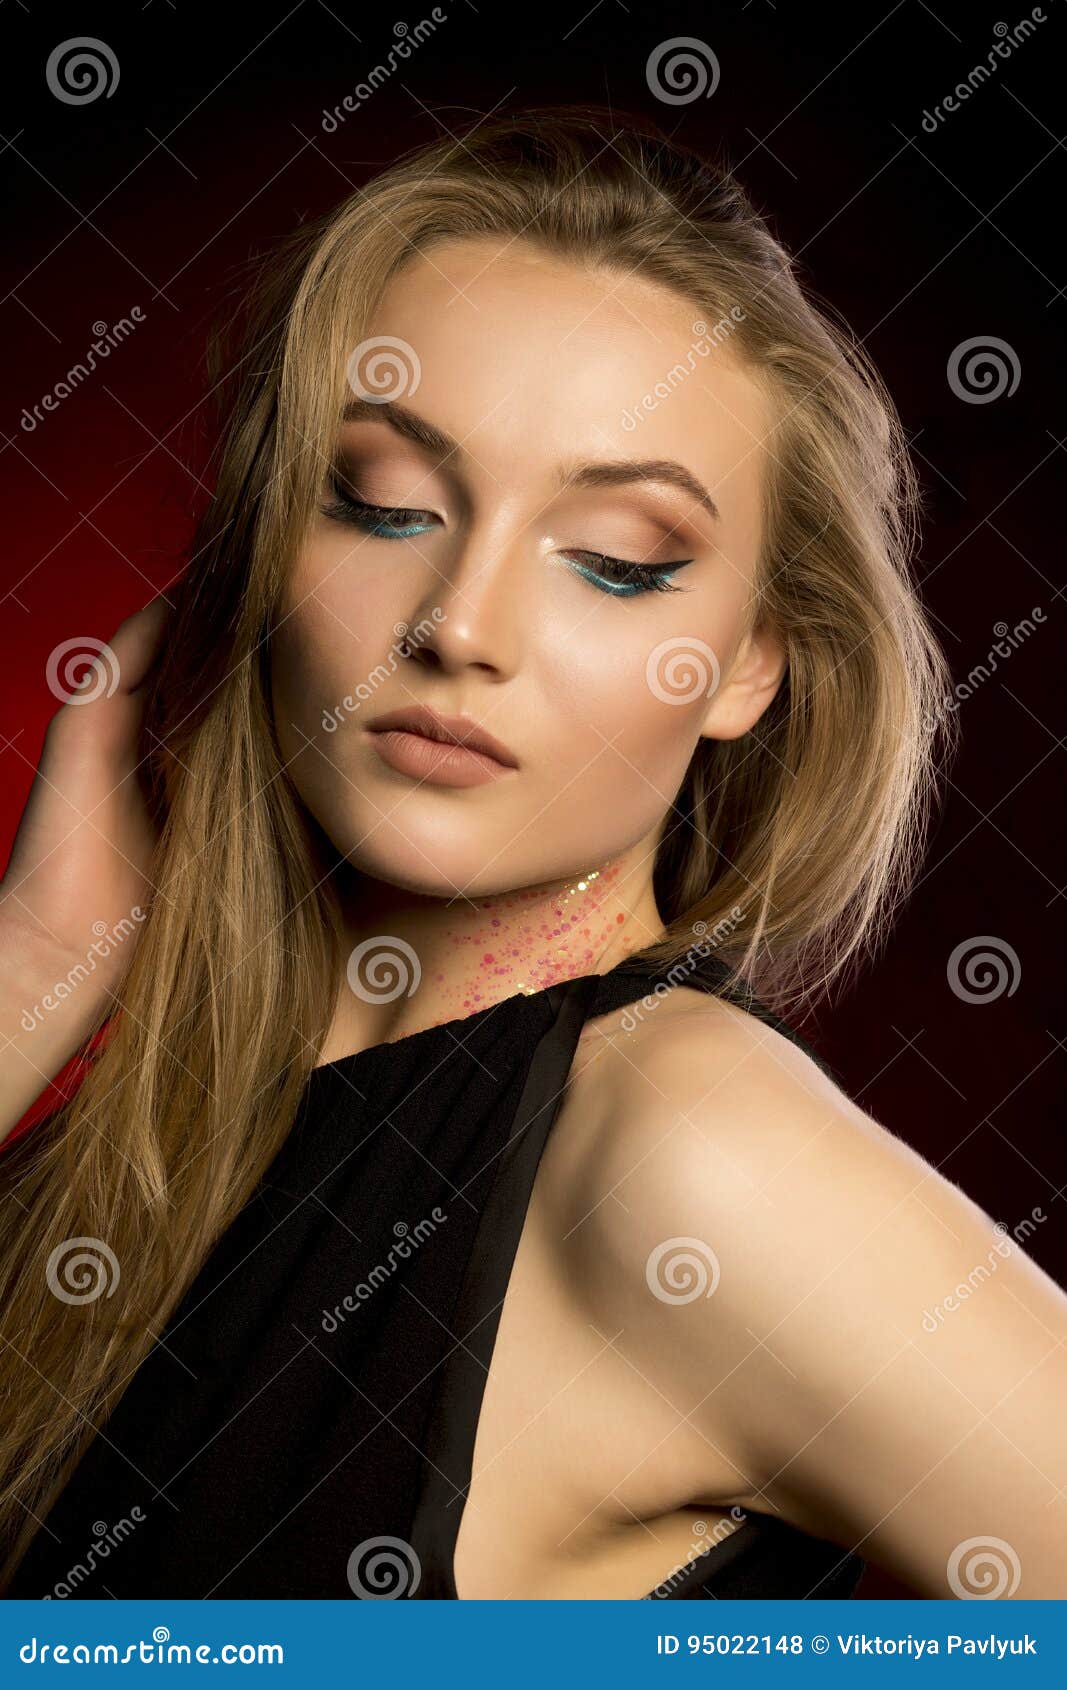 Sensual Woman with Natural Makeup and Lush Blonde Hair Stock Photo ...